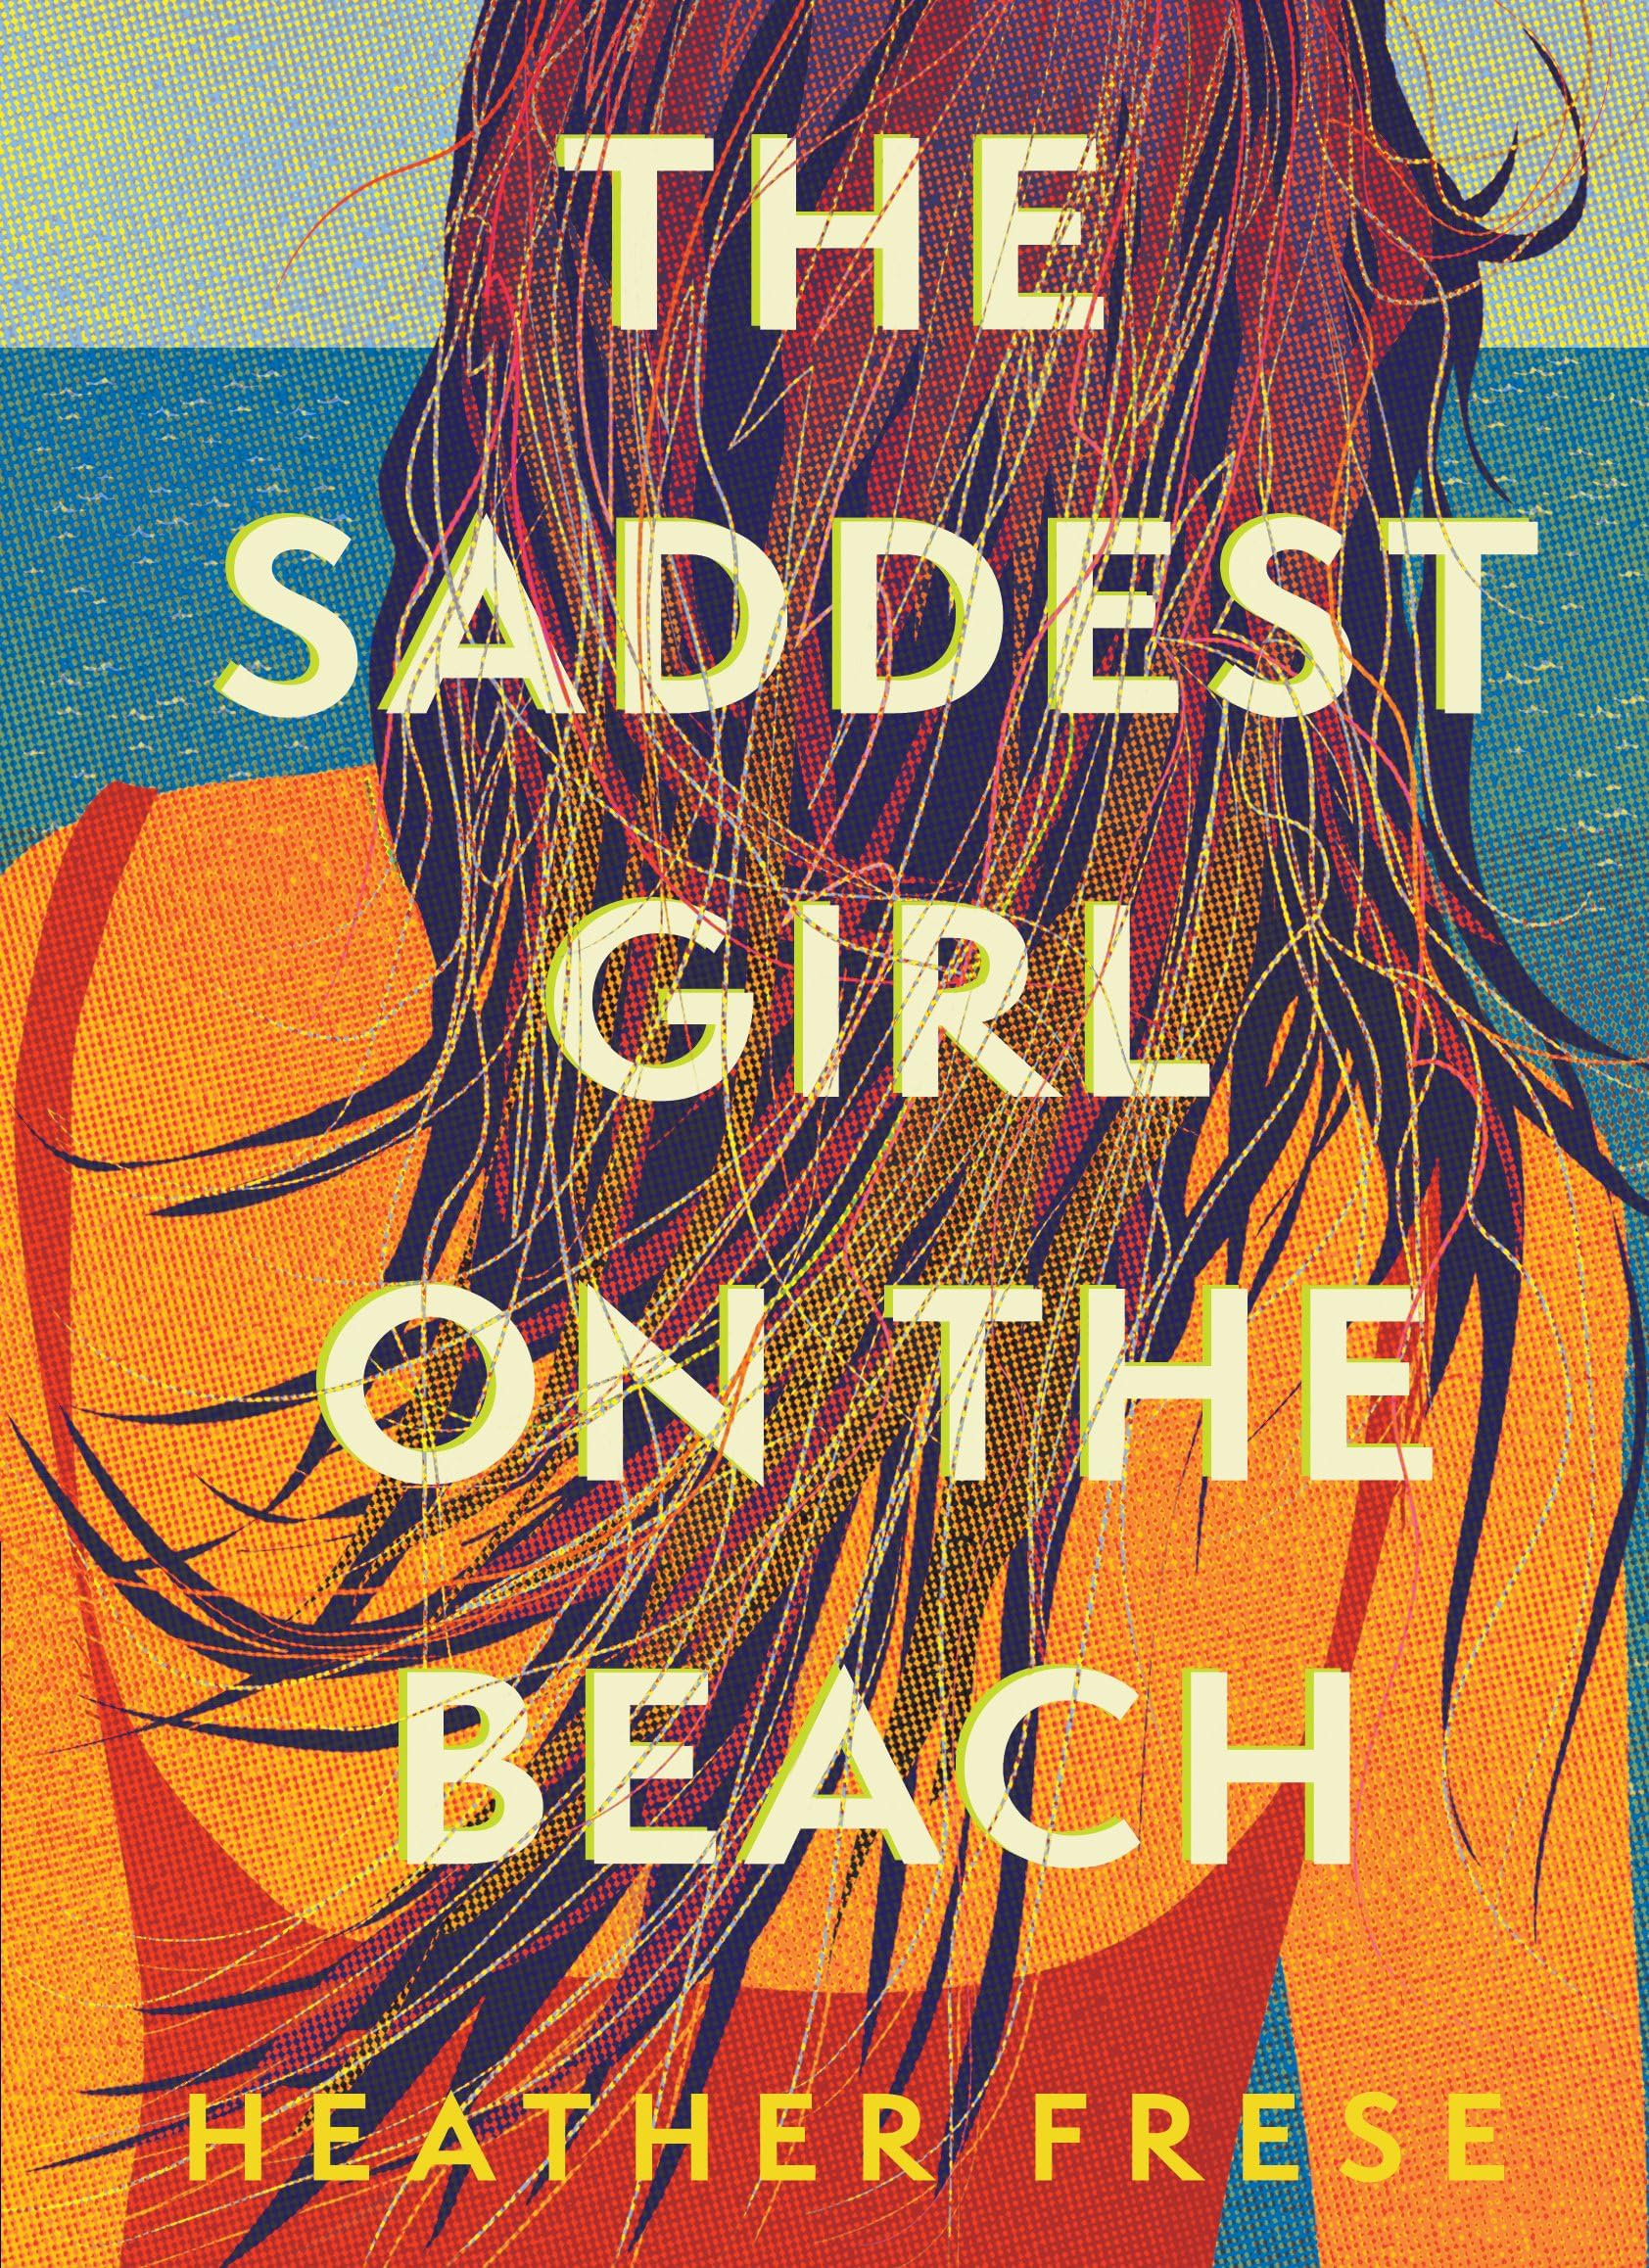 'Saddest Girl on the Beach' highlights personal struggle amid hurricanes | Book Talk